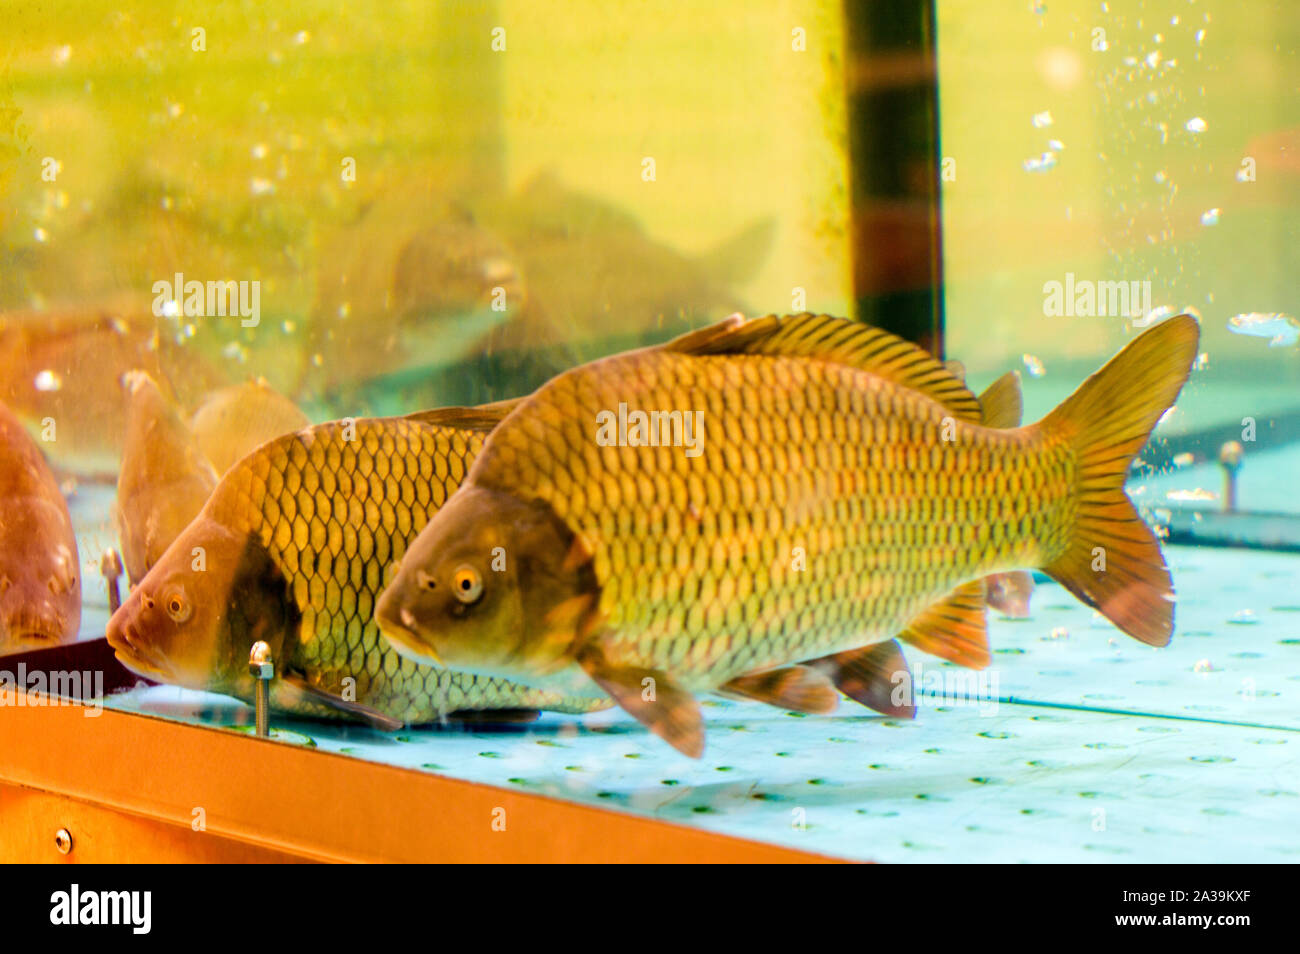 Live carp fish in an aquarium, prepared for sale. Russia. Stock Photo